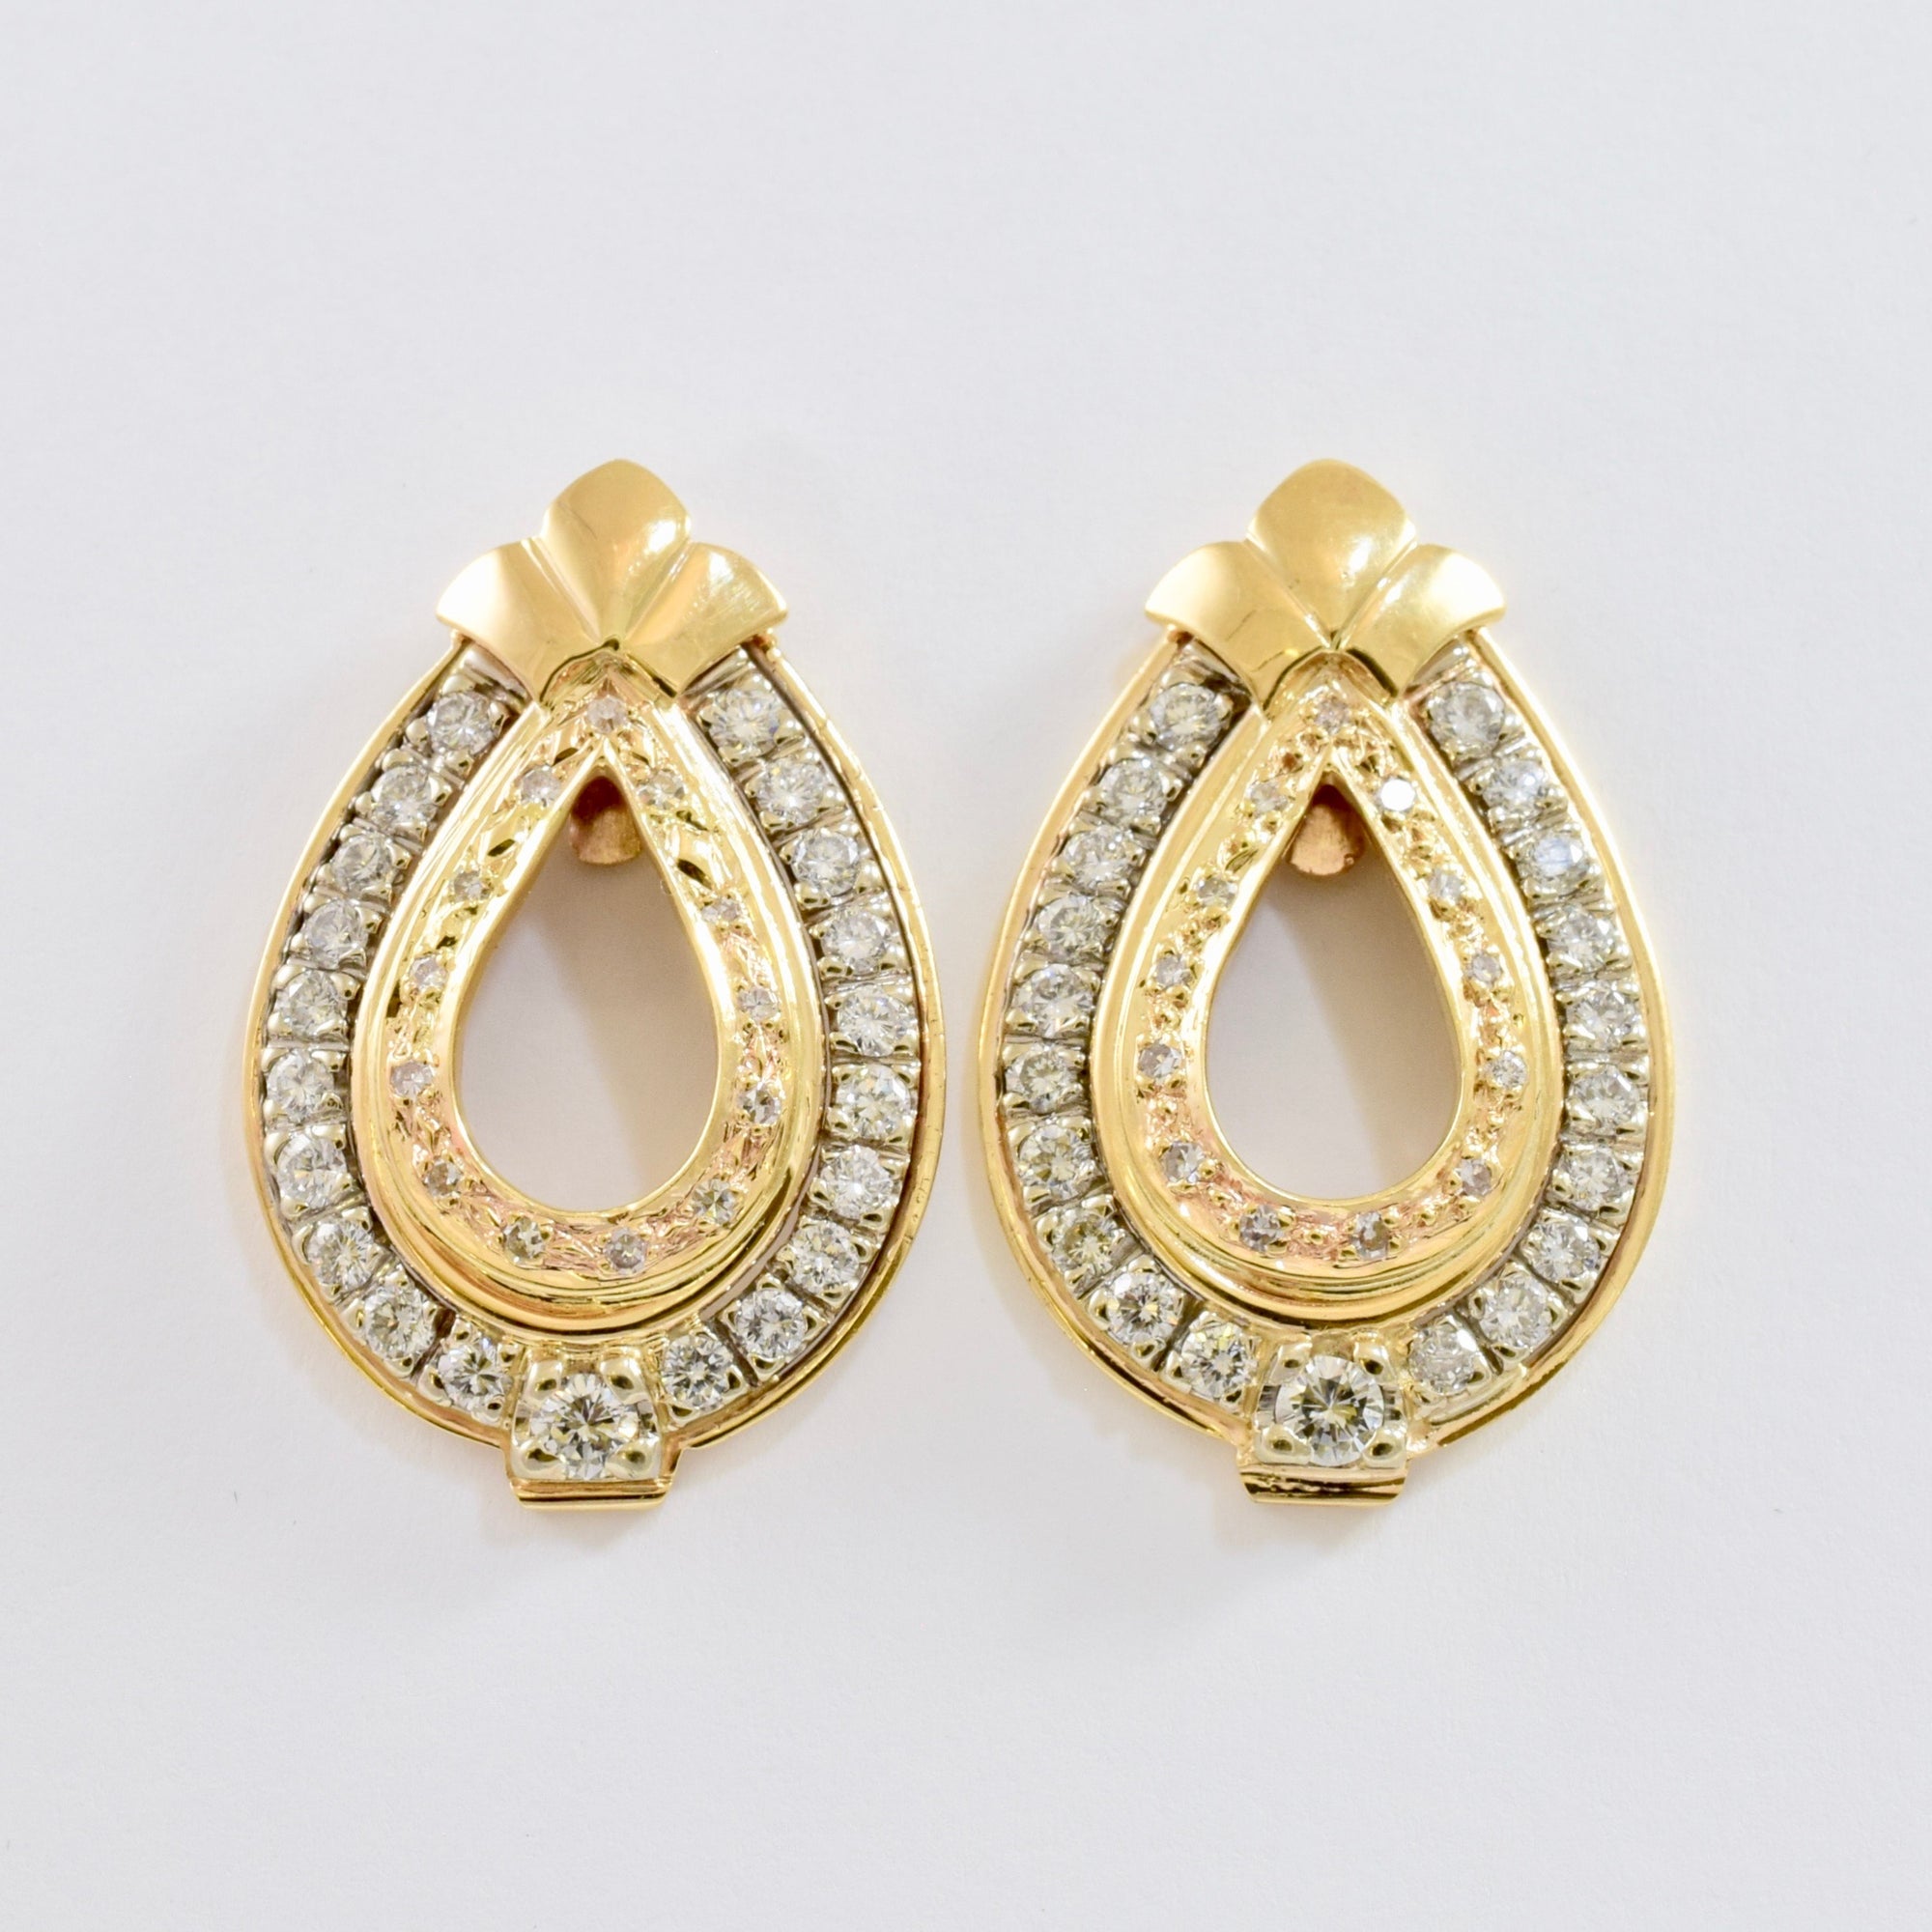 Large Pear Shaped Diamond Earrings | 3.06 ctw |